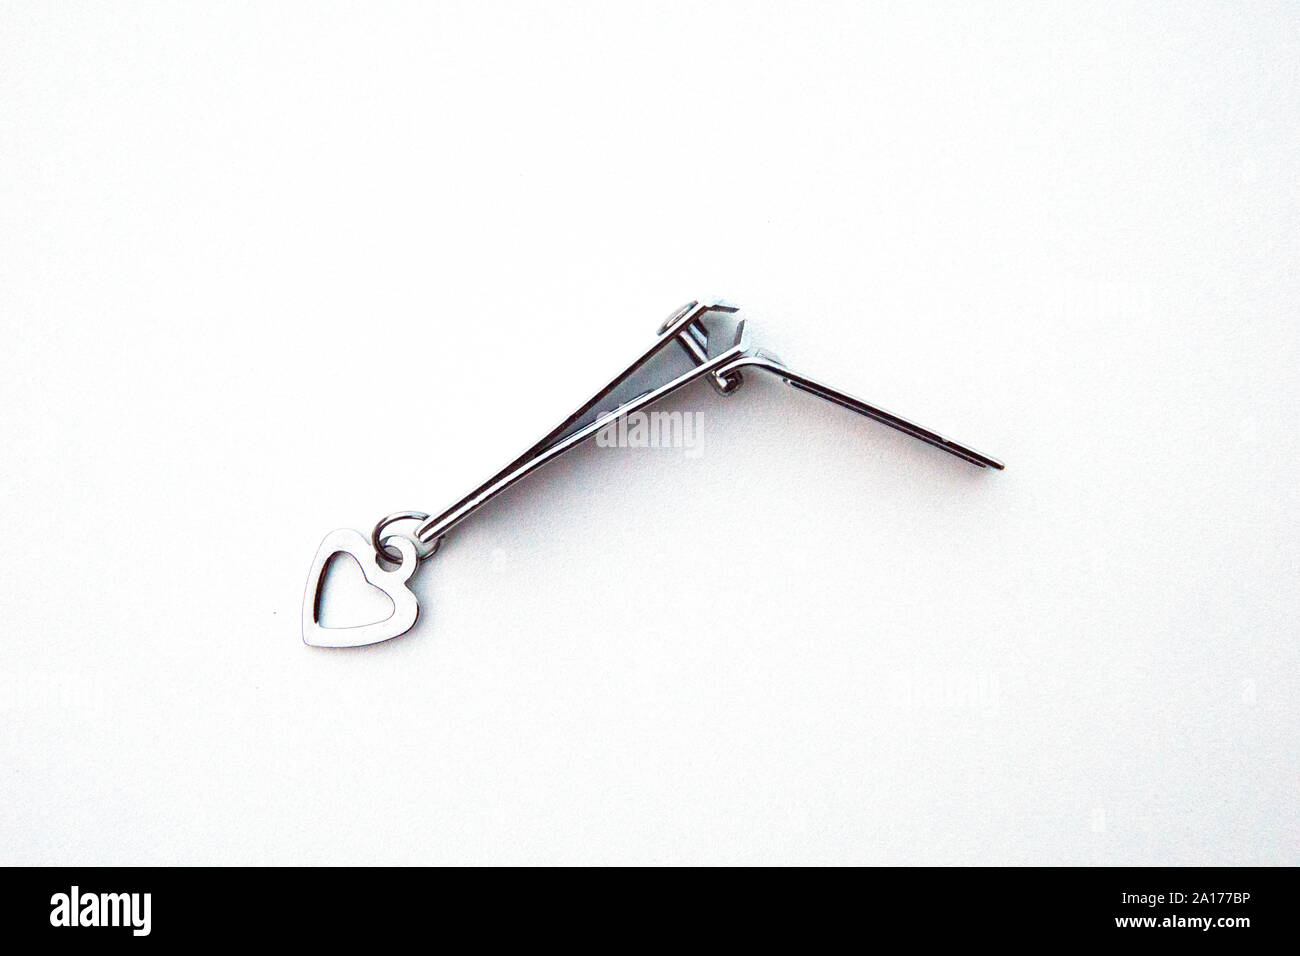 Discover 160+ cute nail cutter latest